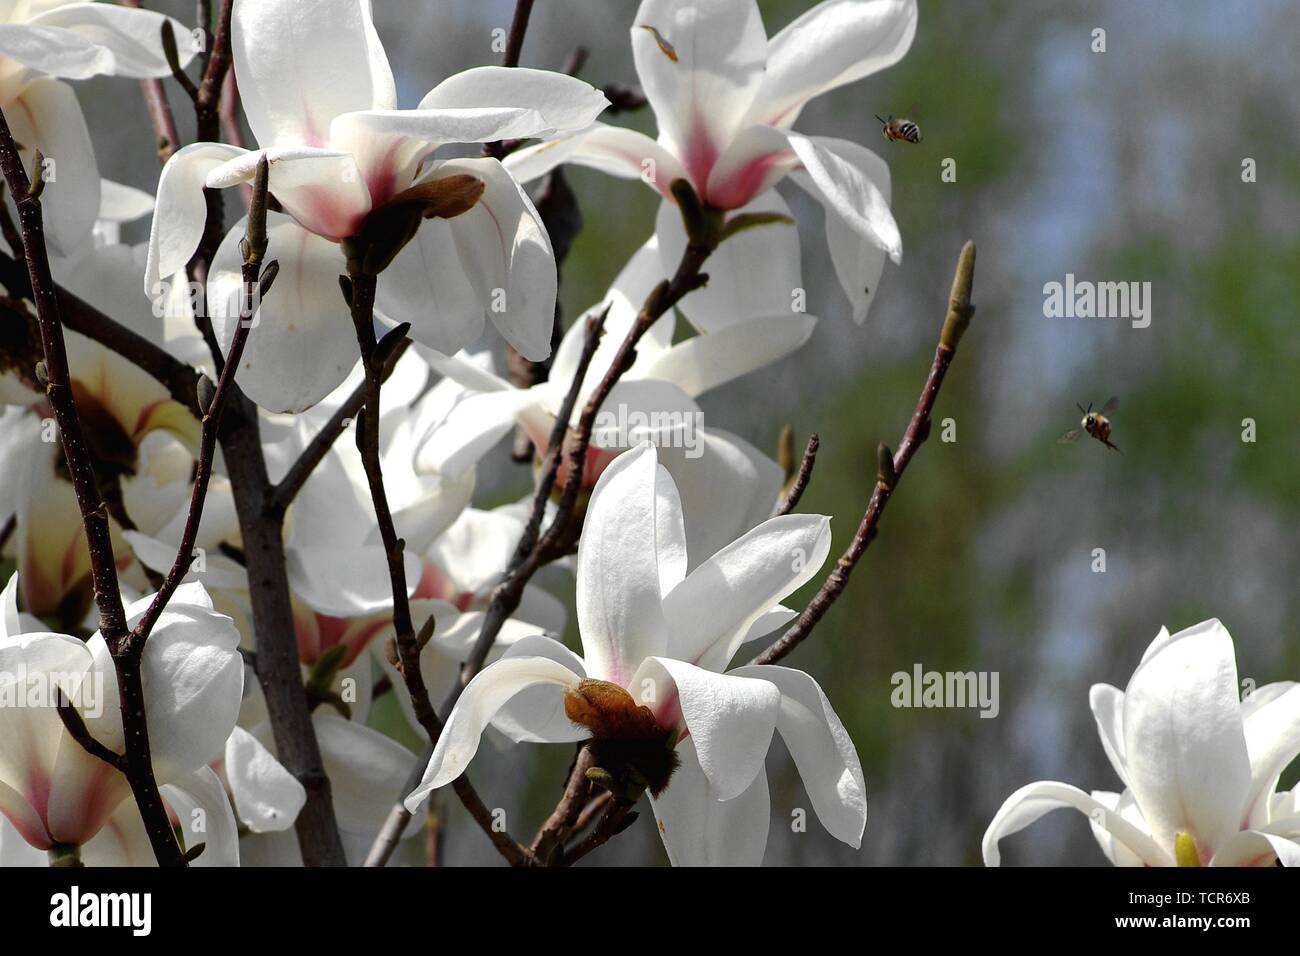 Magnolia magnolia flower Stock Photo